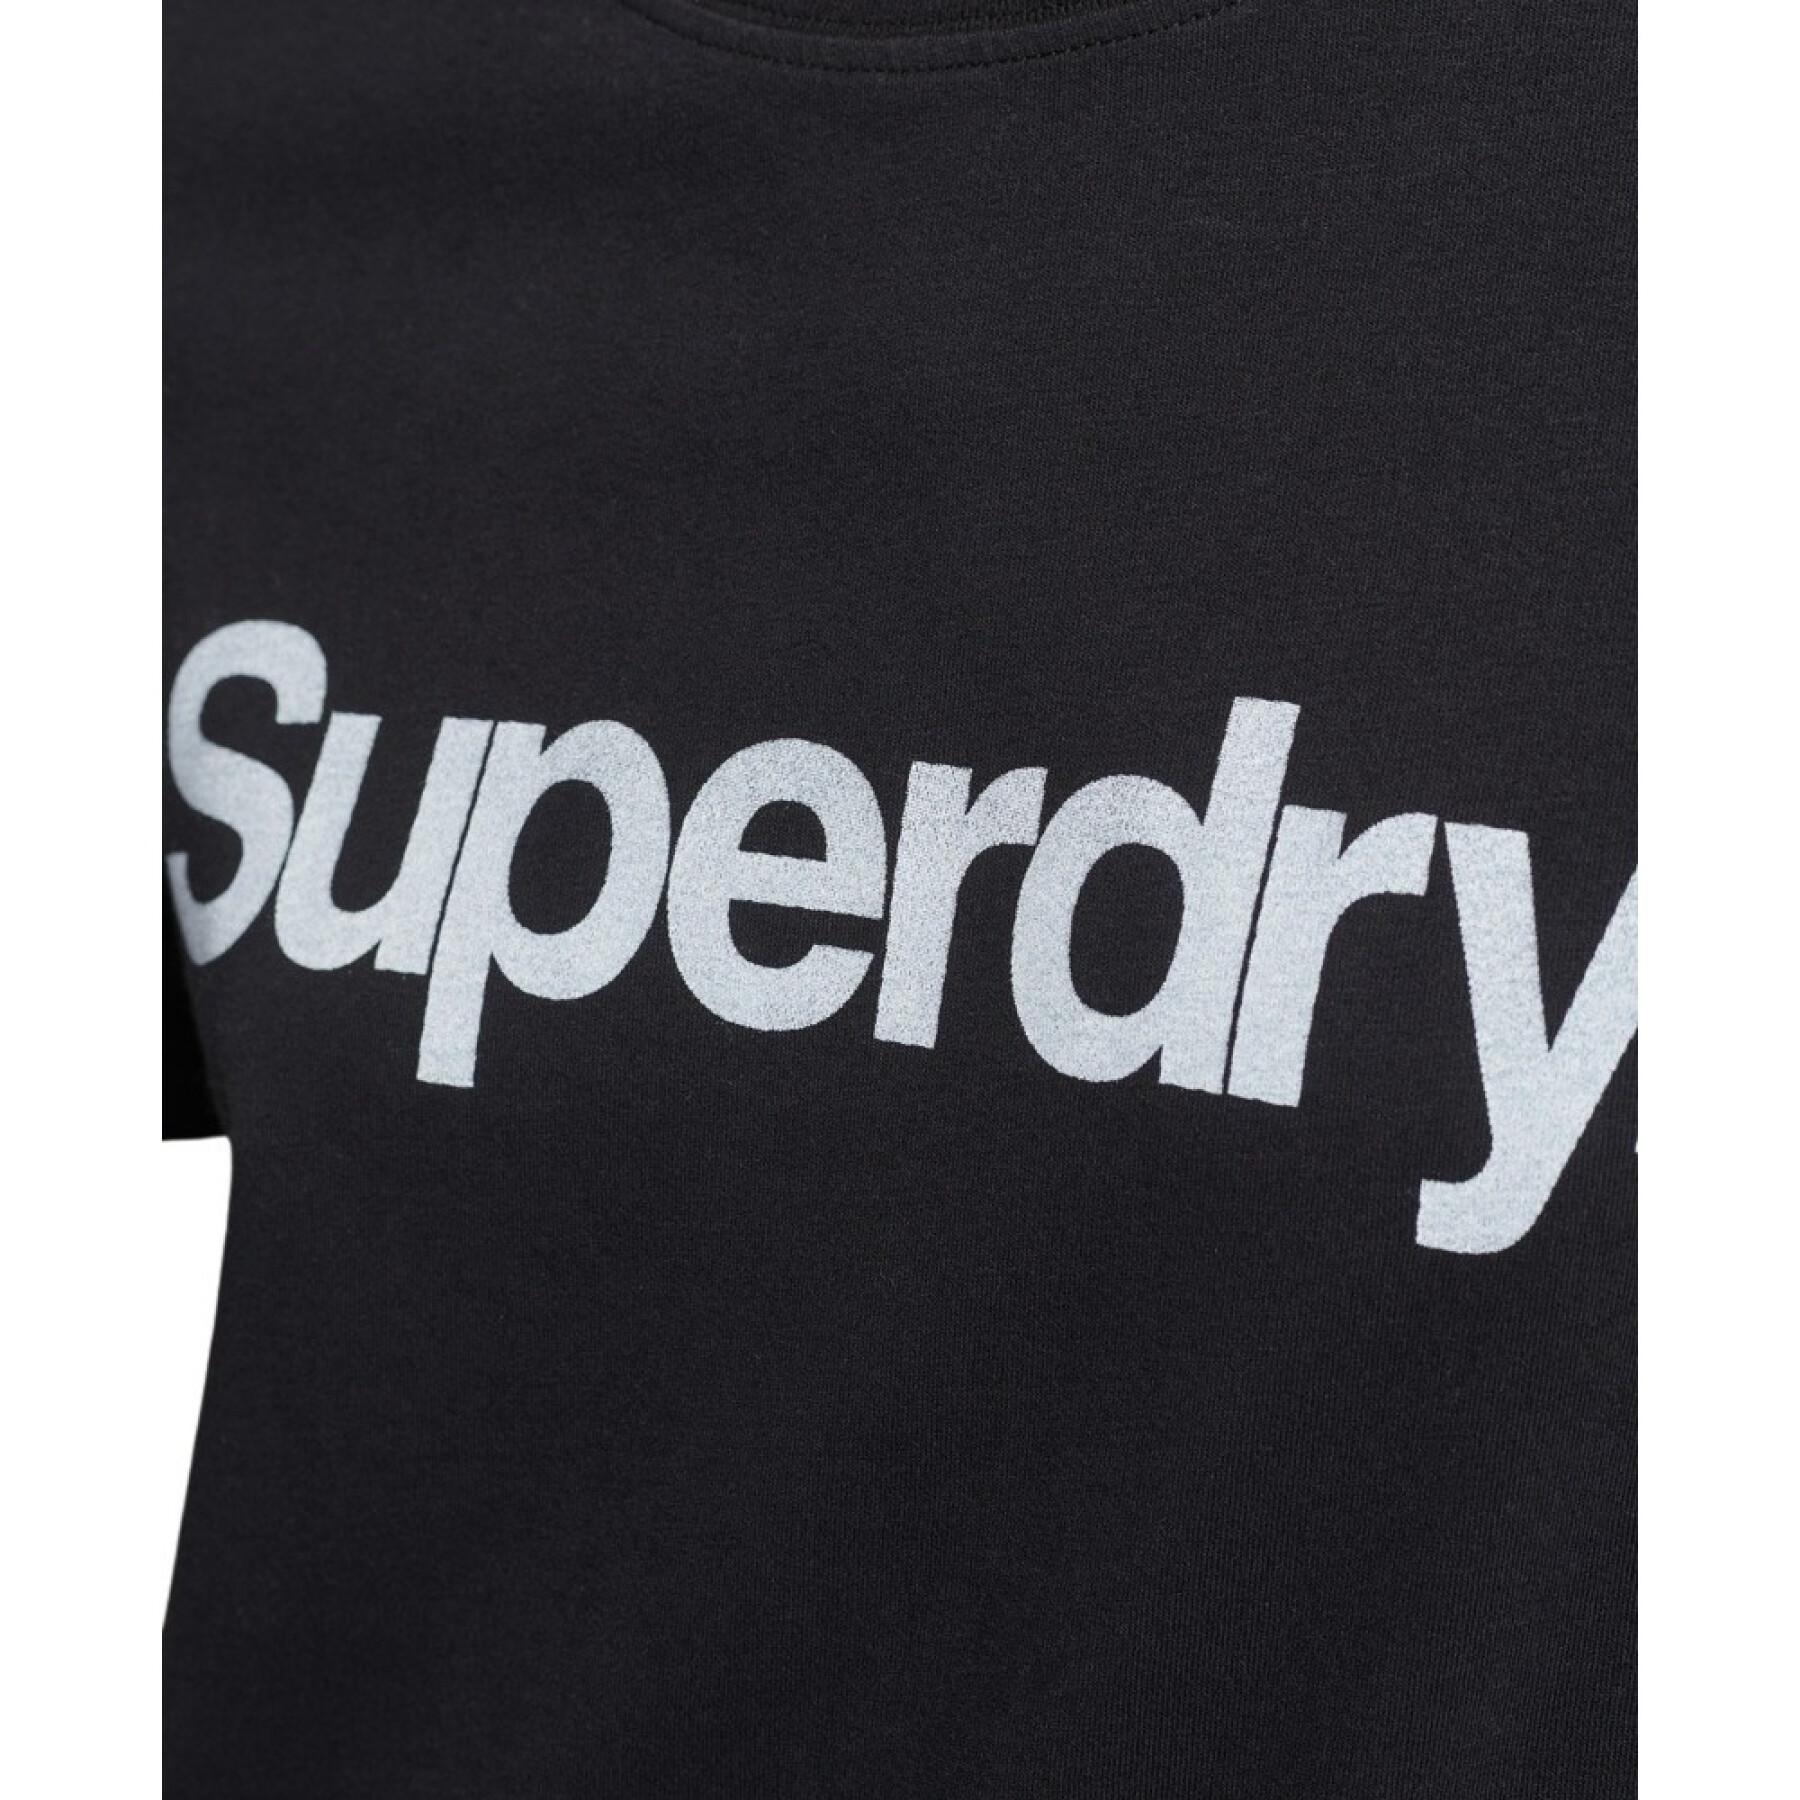 Organic cotton t-shirt girl Superdry Core Logo 80s